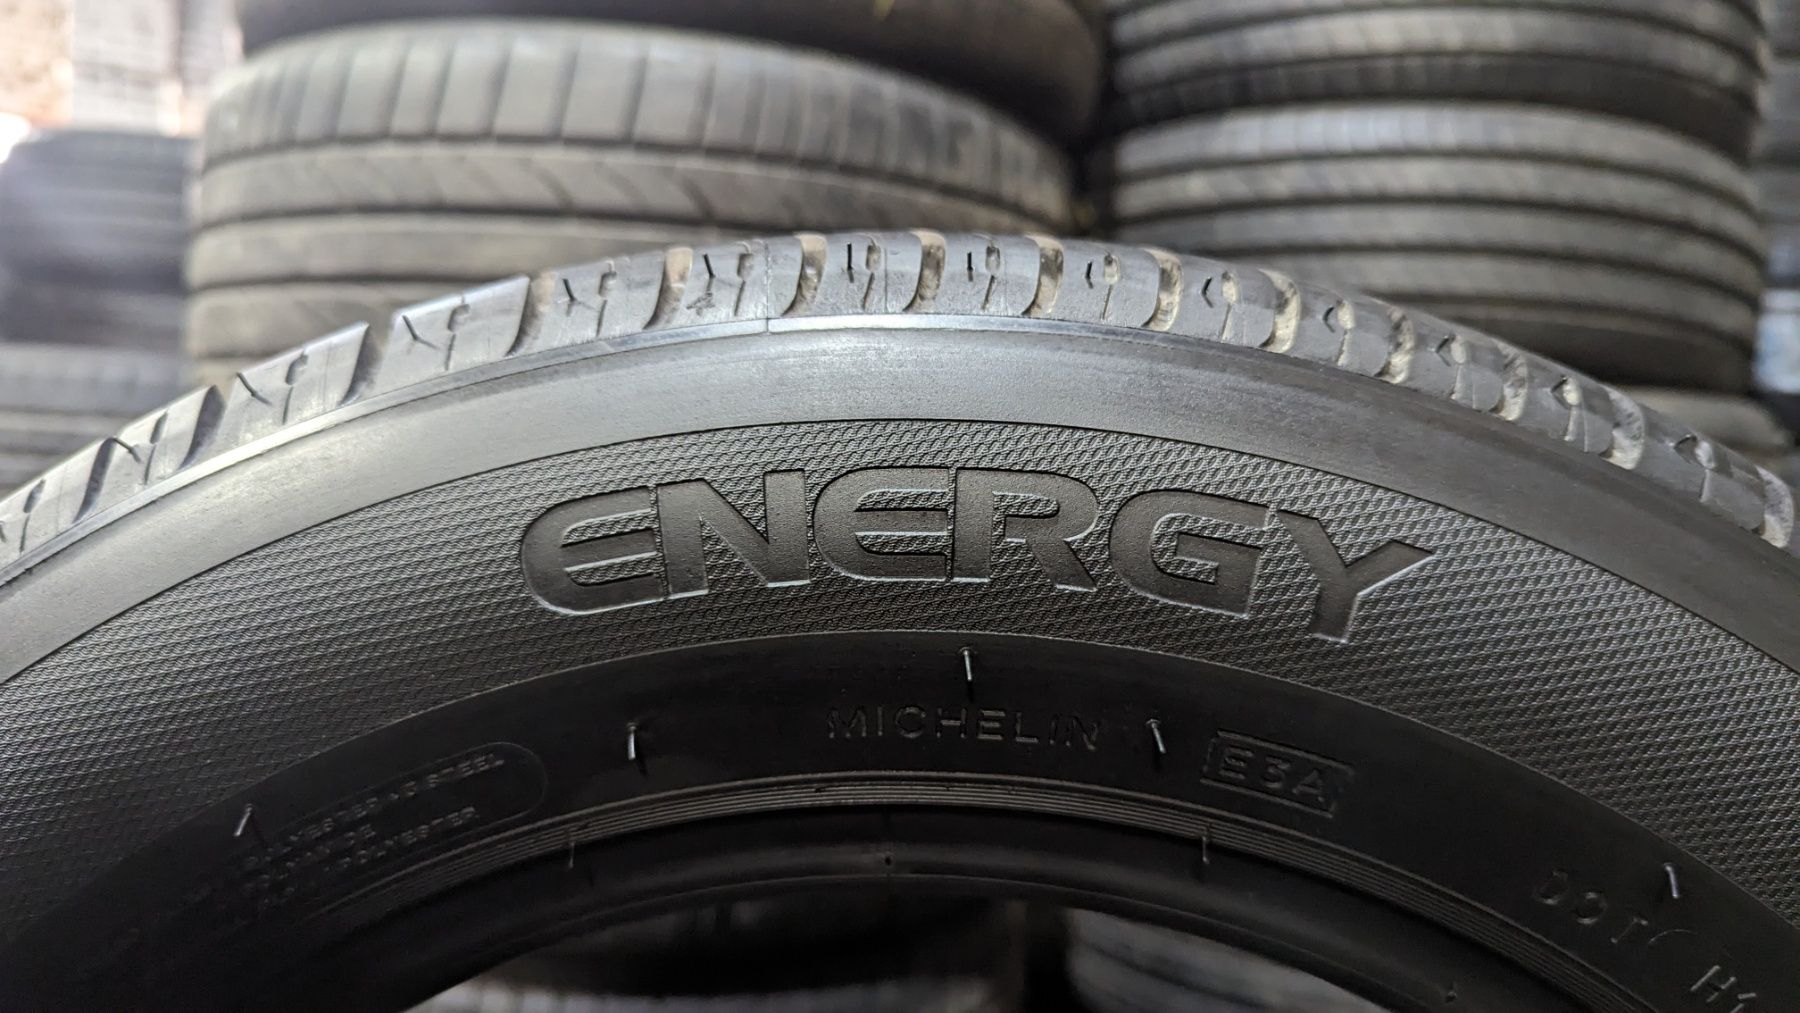 Шина 195/65 R 15 Michelin Energy E3. Одне нове колесо. Розпаровка